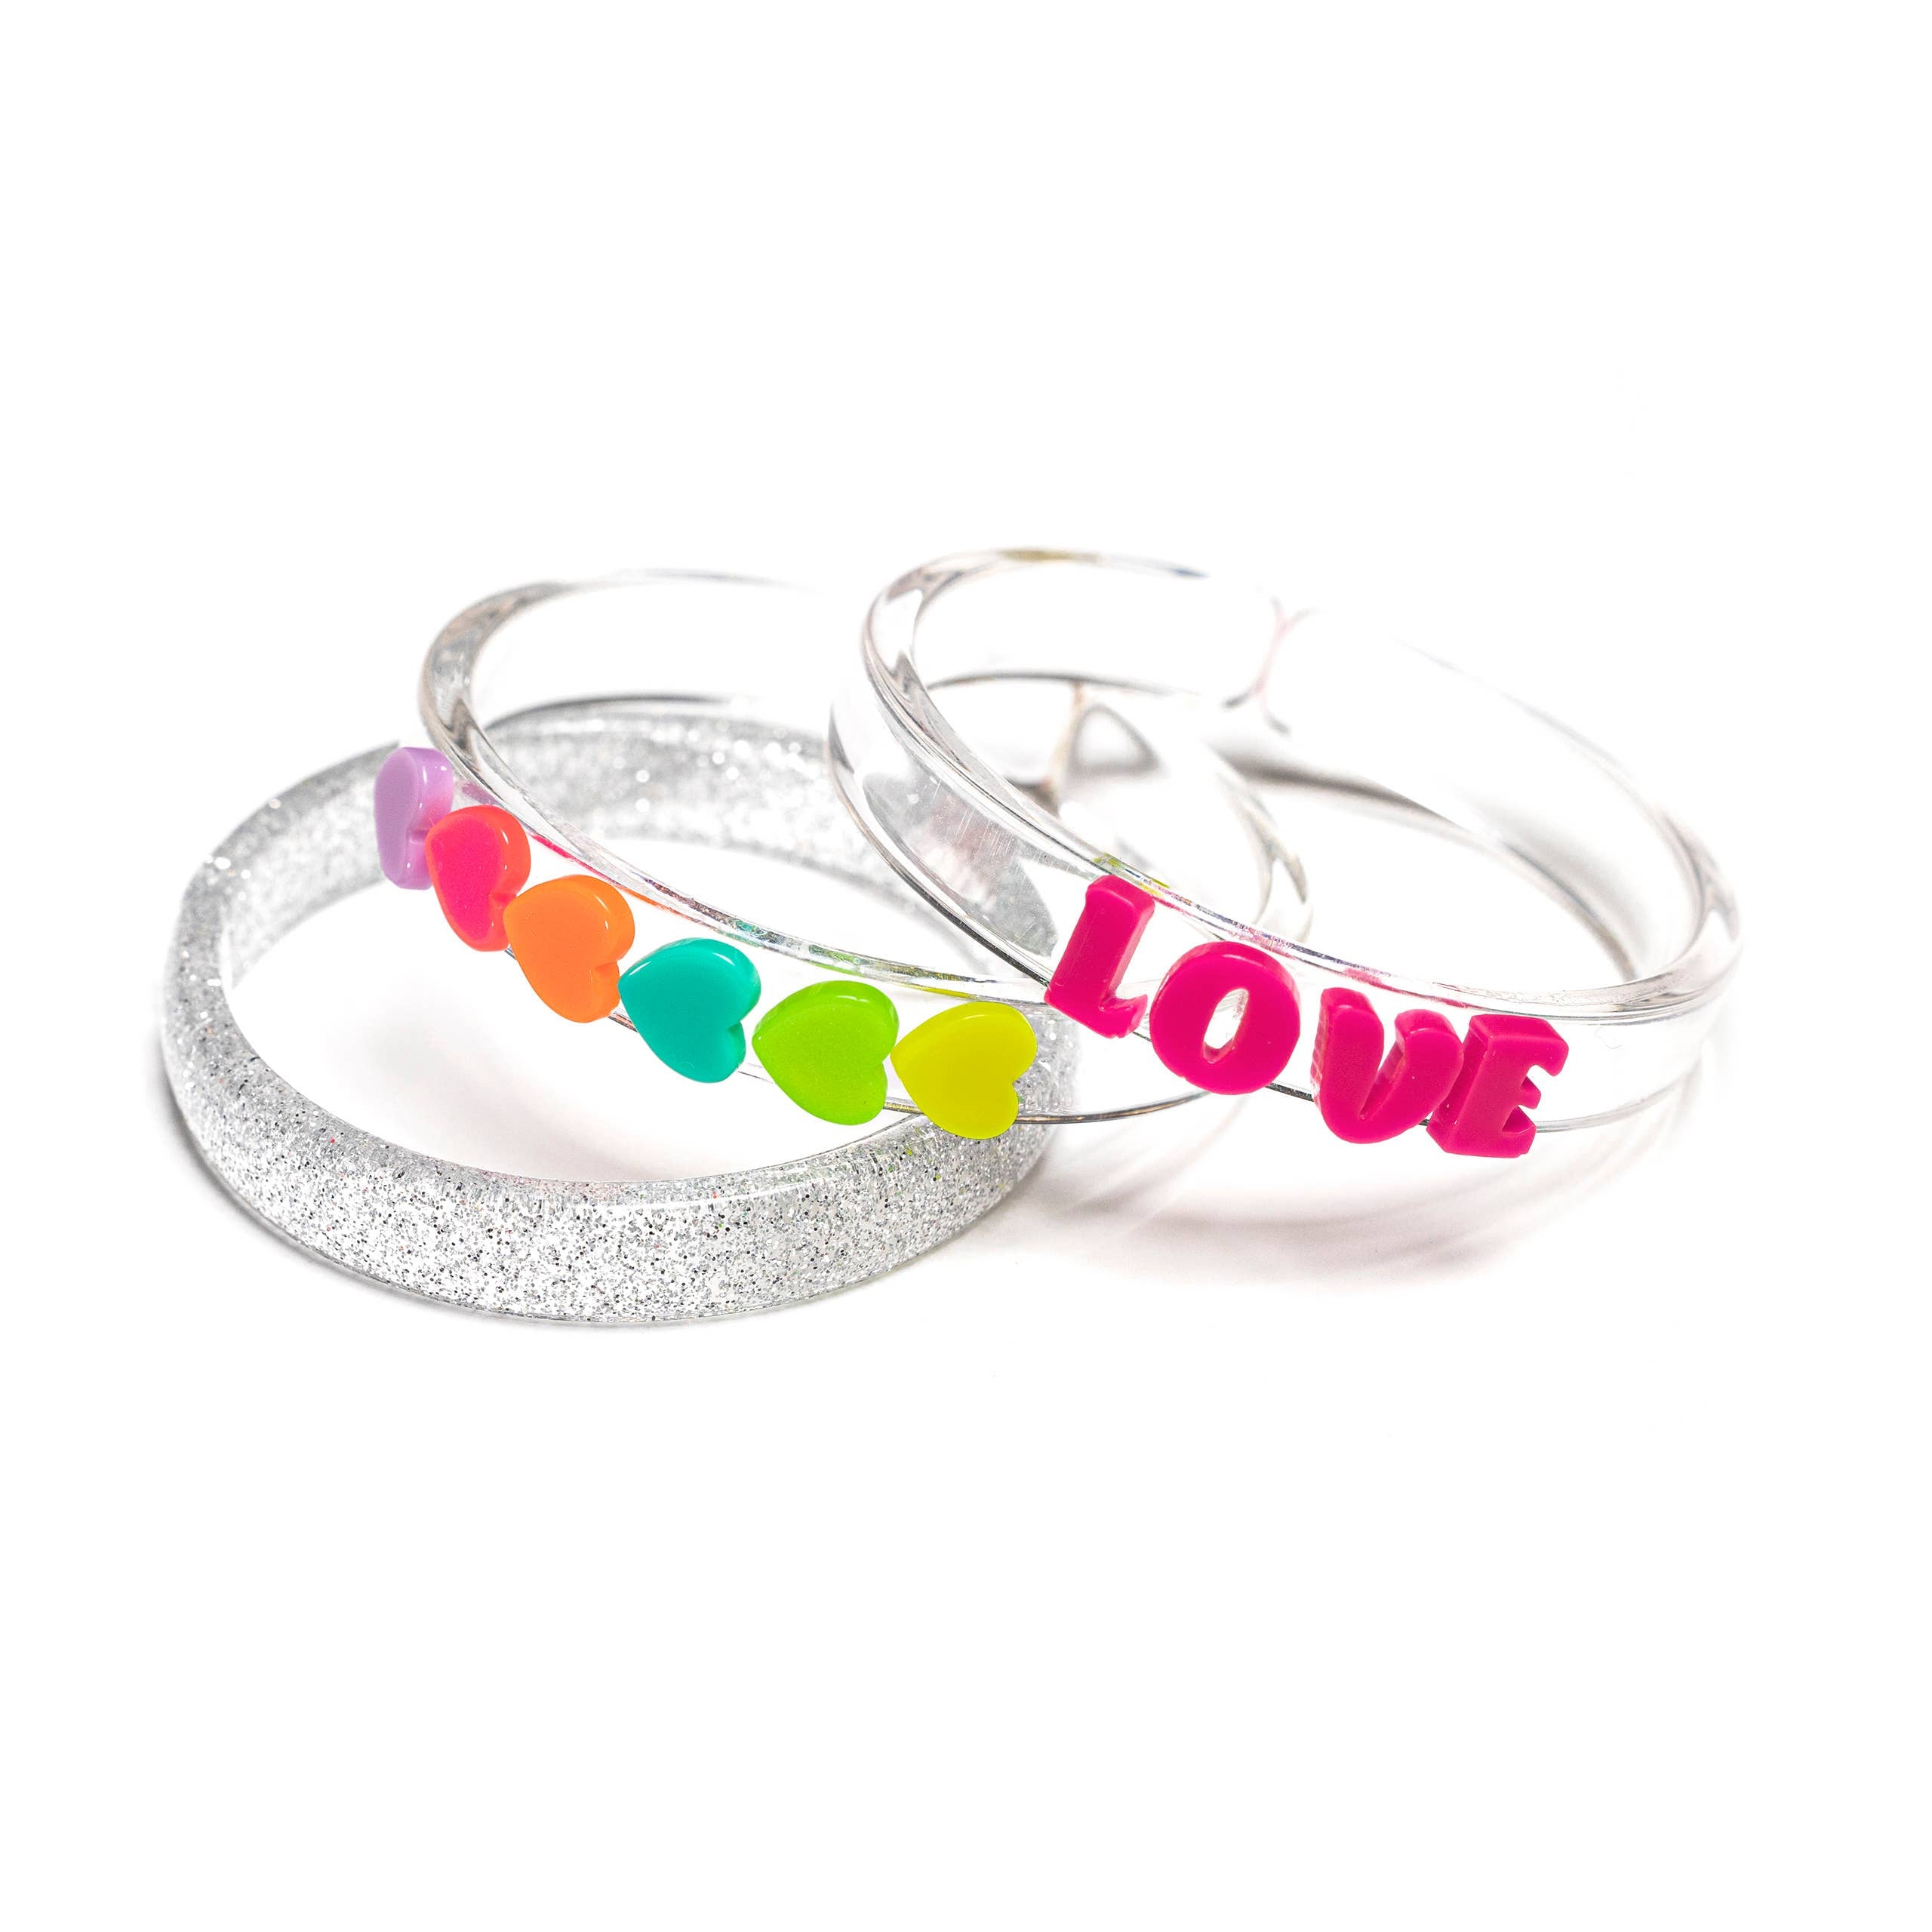 Neon Heart Mix Bangle Bracelets (Set of 3)